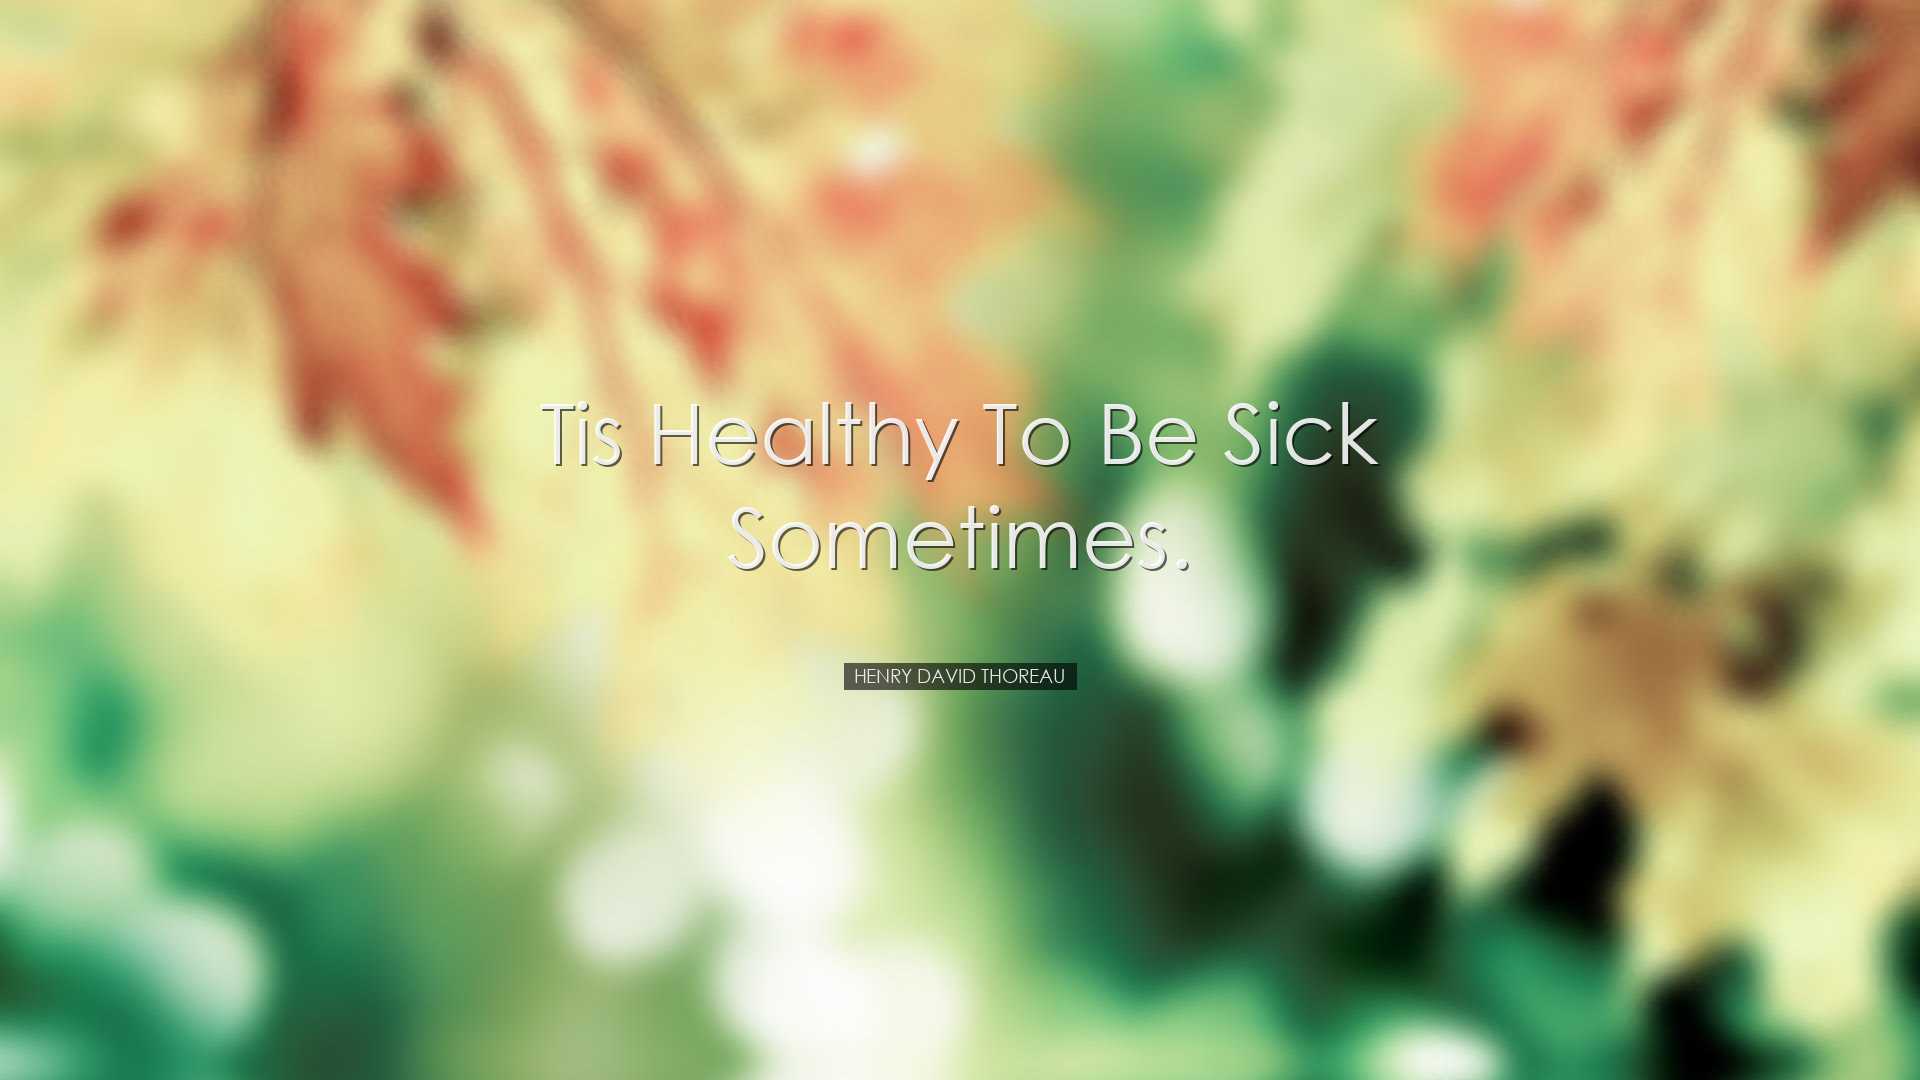 Tis healthy to be sick sometimes. - Henry David Thoreau